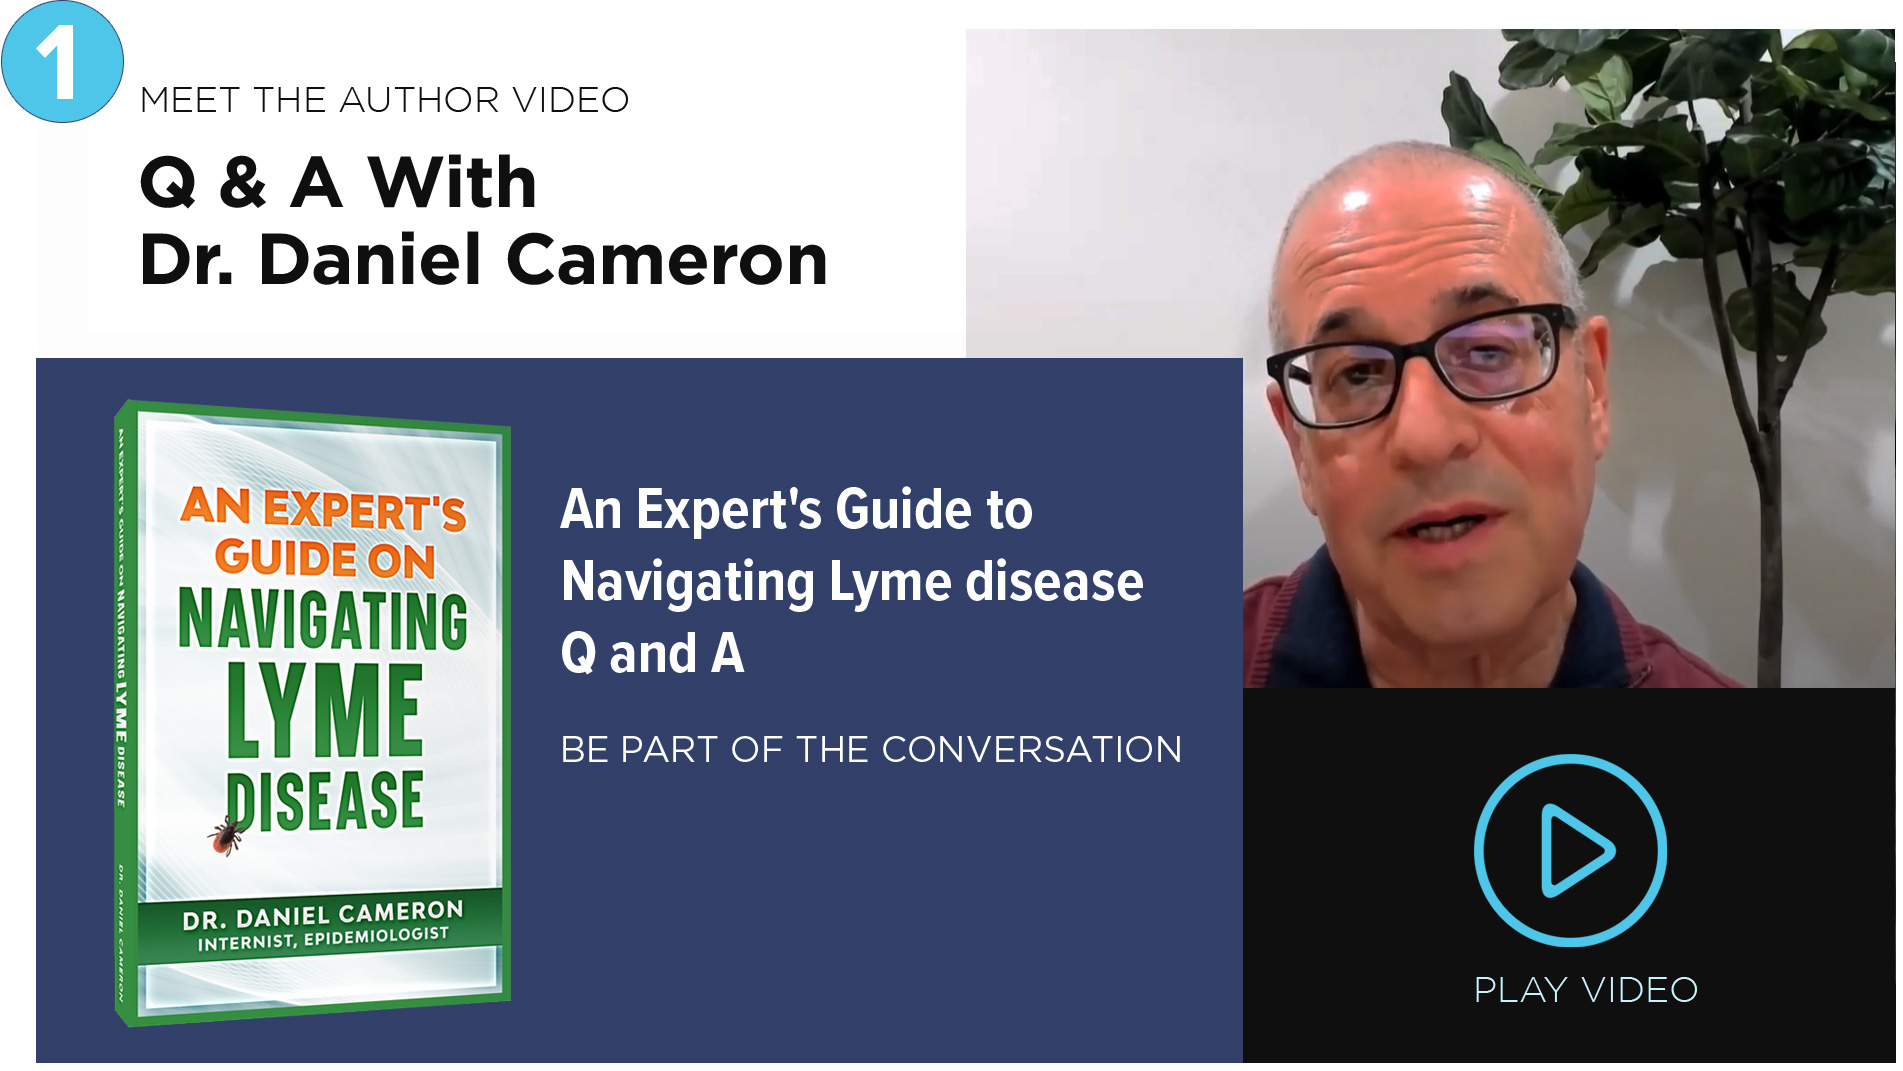 Meet the author Dr. Daniel Cameron